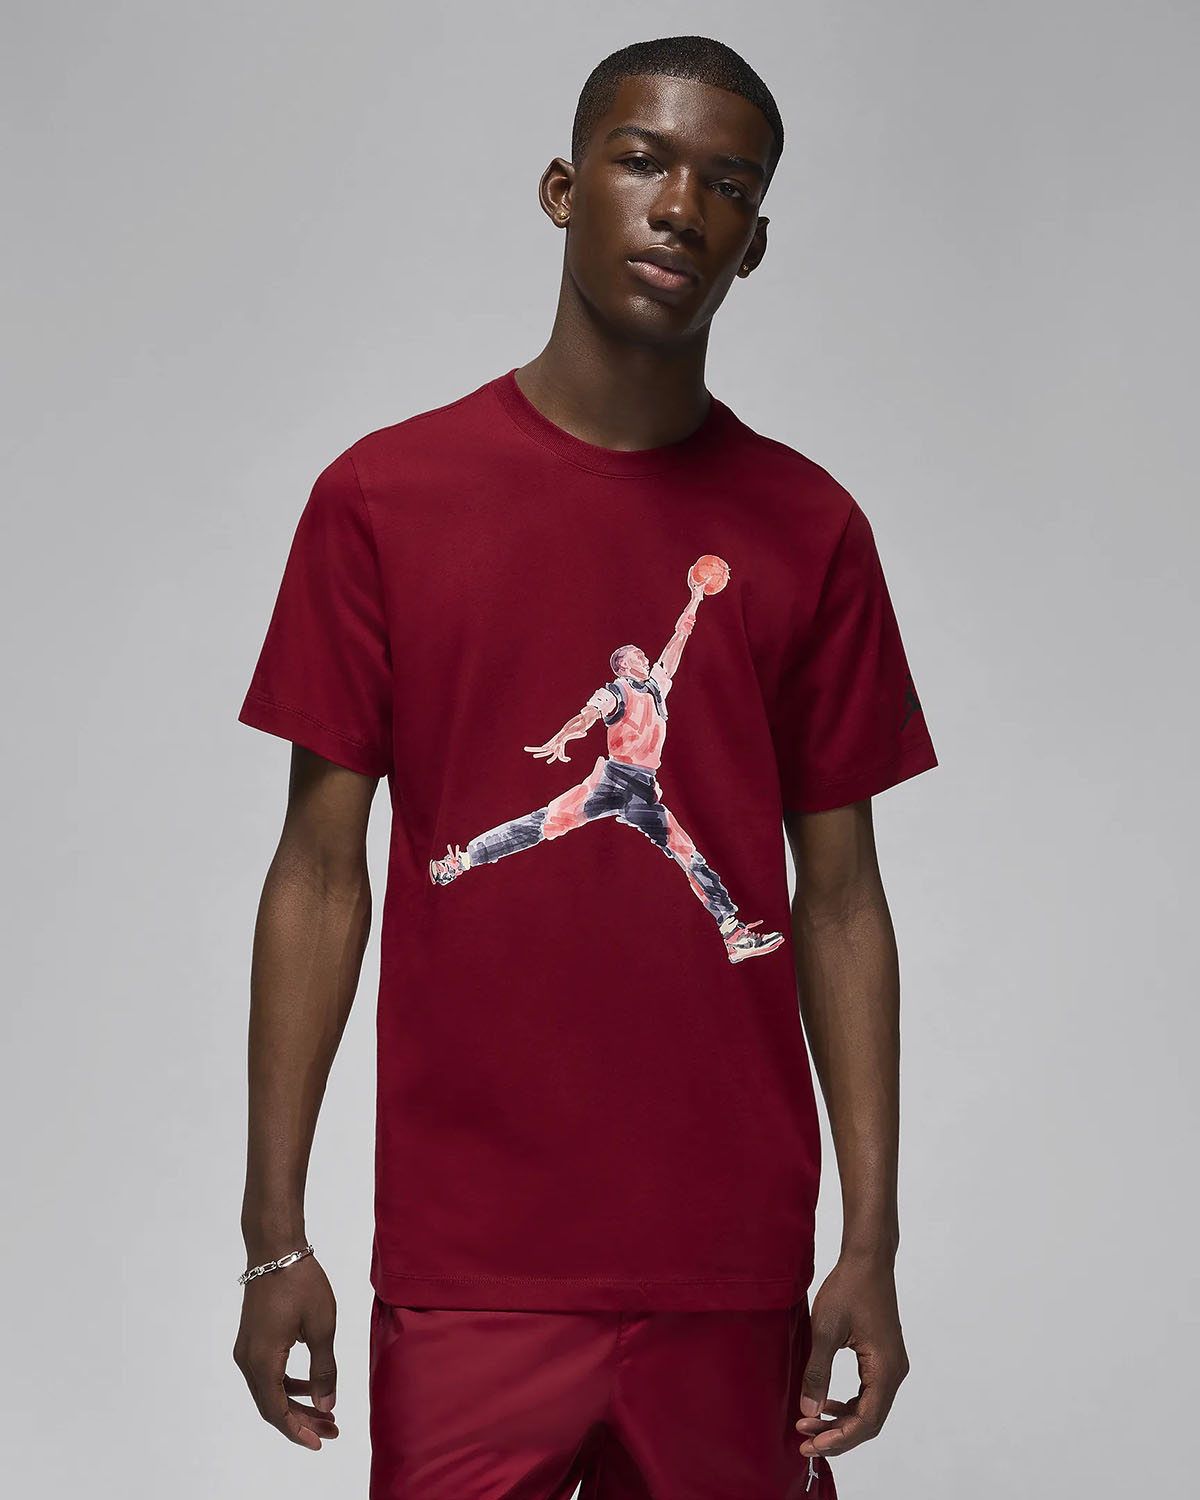 Jordan Year Jumpman T Shirt Team Red 1